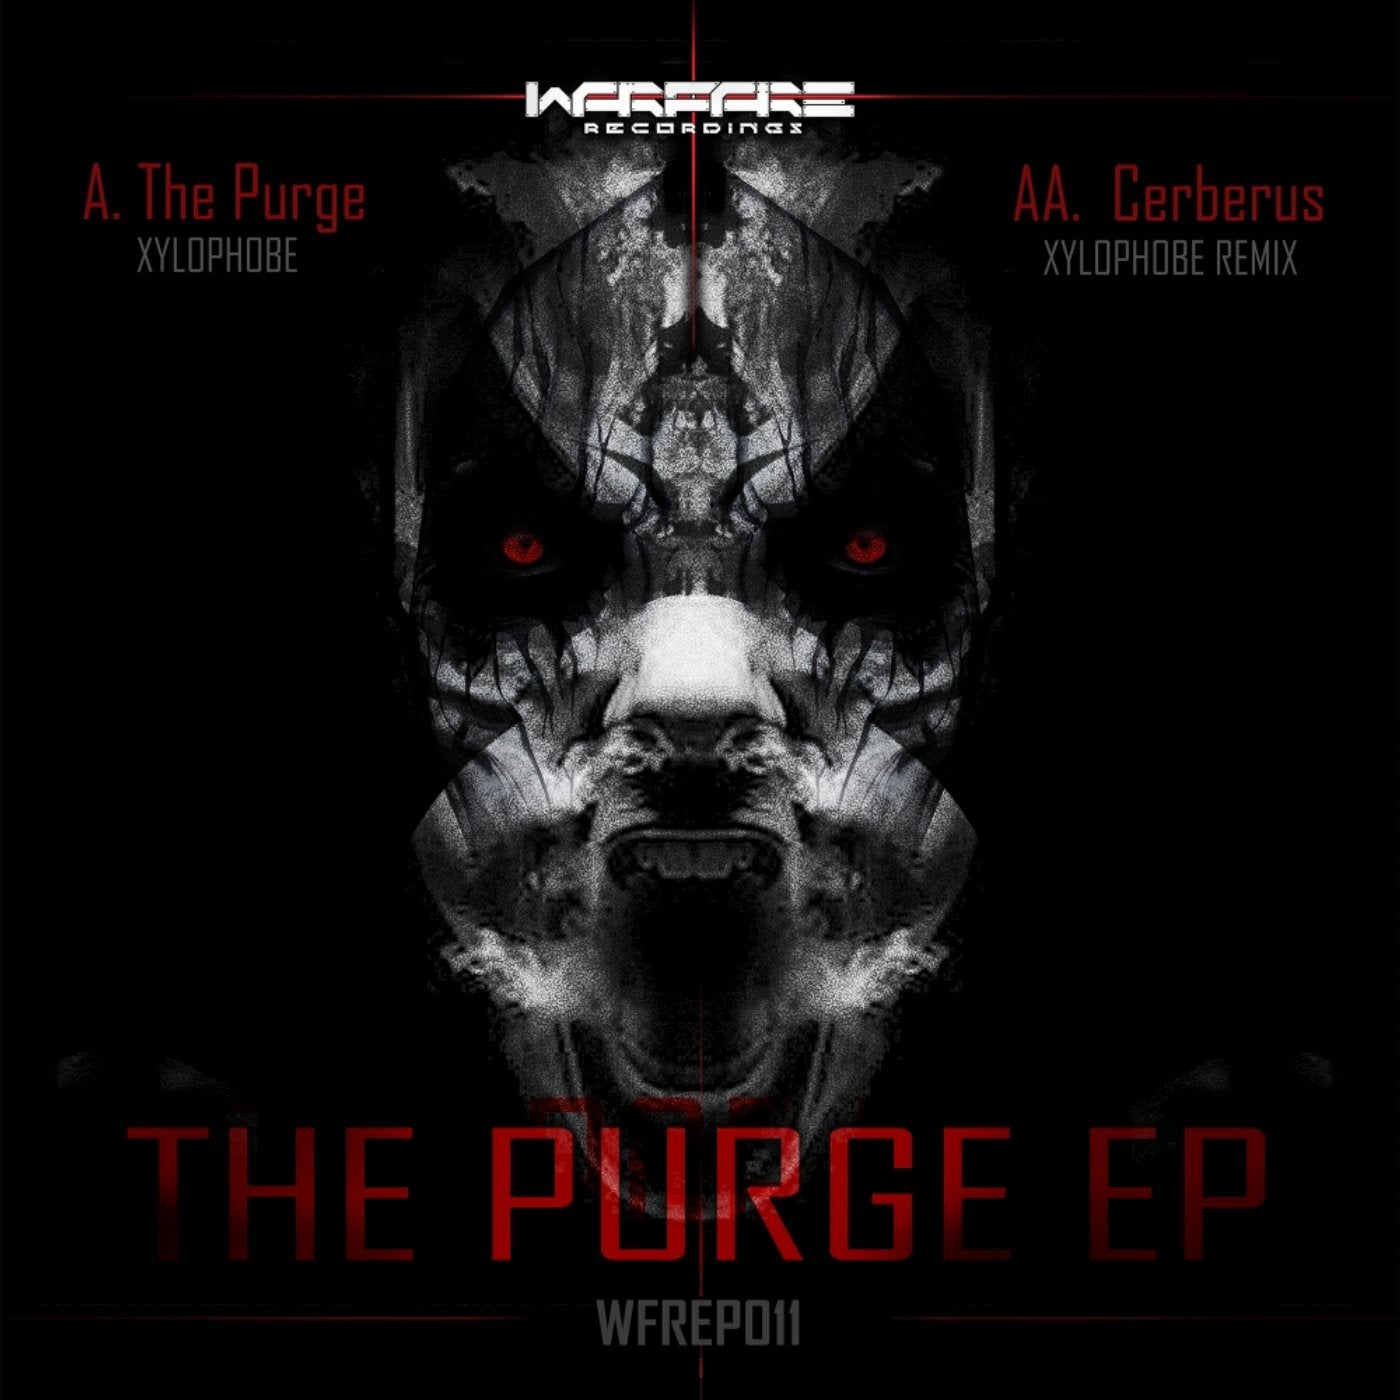 The Purge EP